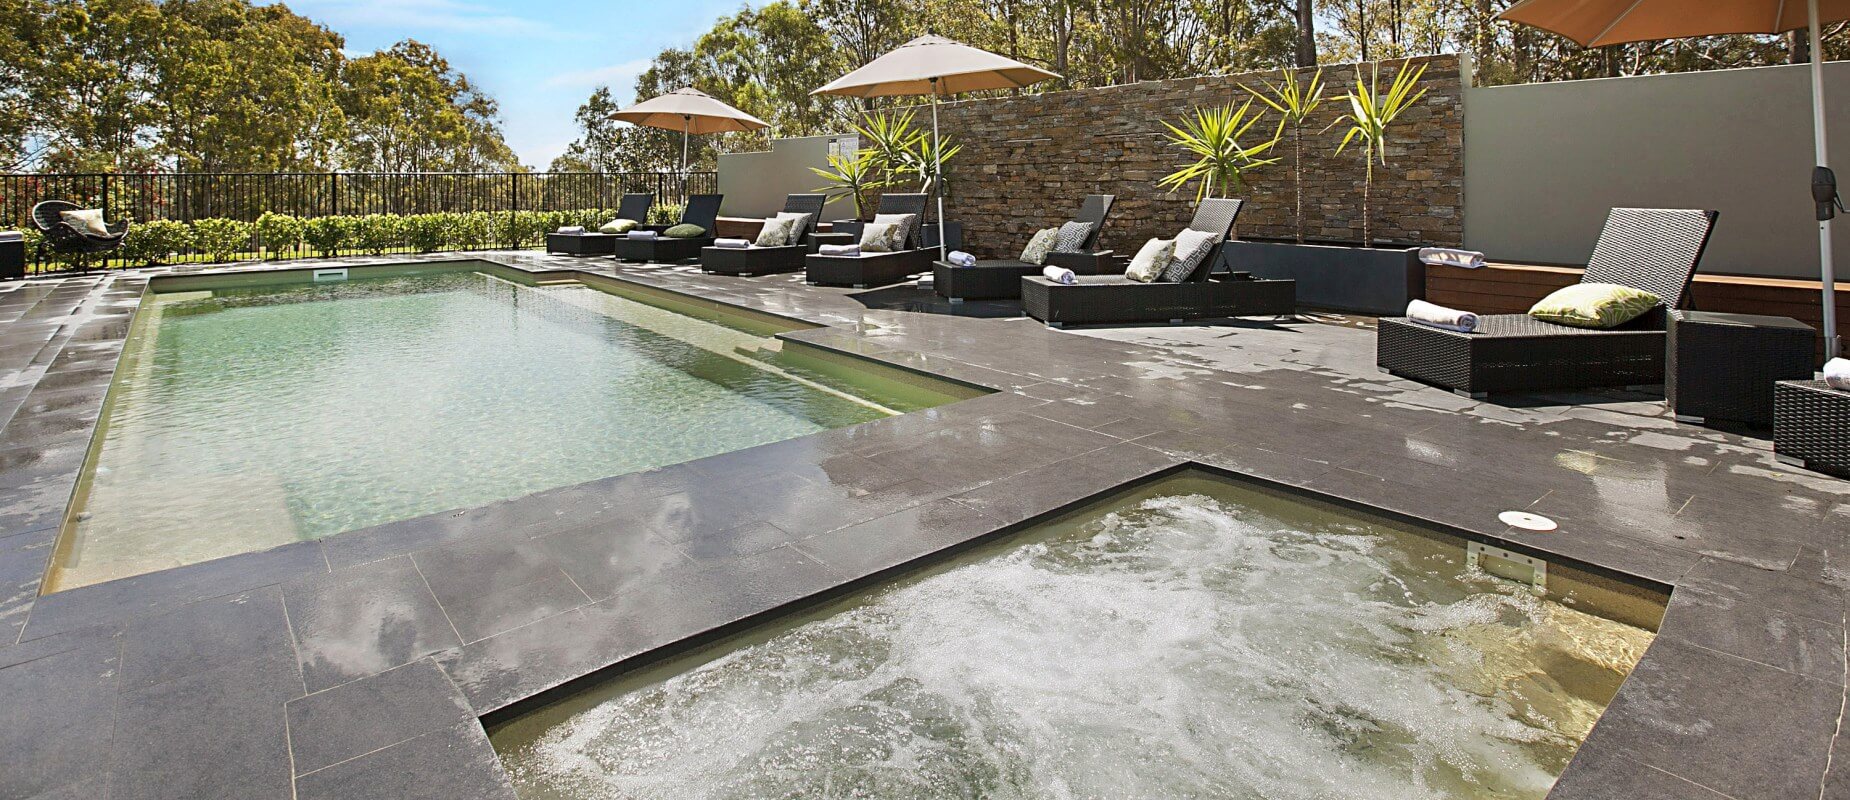 009-Compass-Pools-Australia_Family-pool-and-spa-combo_Vogue-fibreglass-swimming-pool